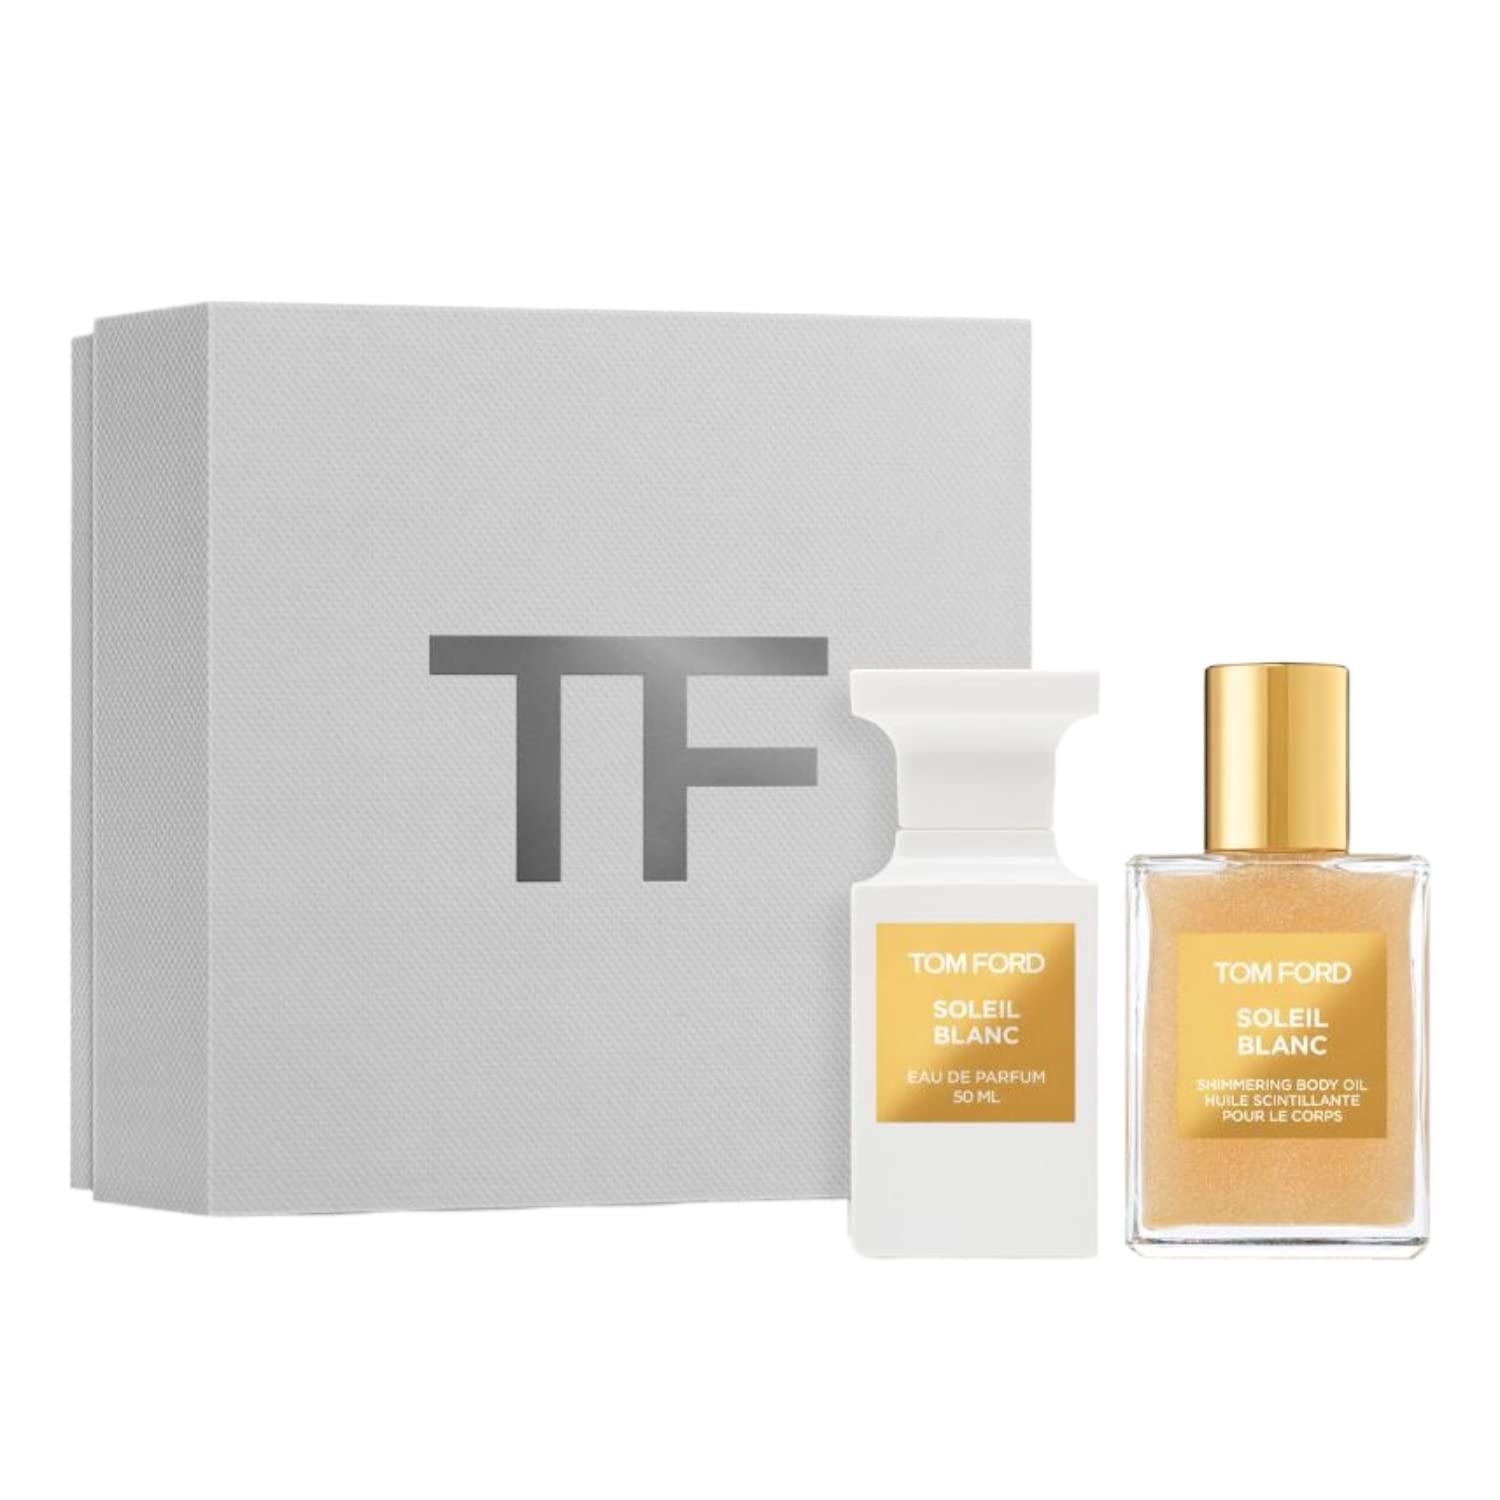 Tom Ford Private Blend Soleil Blanc 2 Piece Set - Eau De Parfum and Shimmering Body Oil